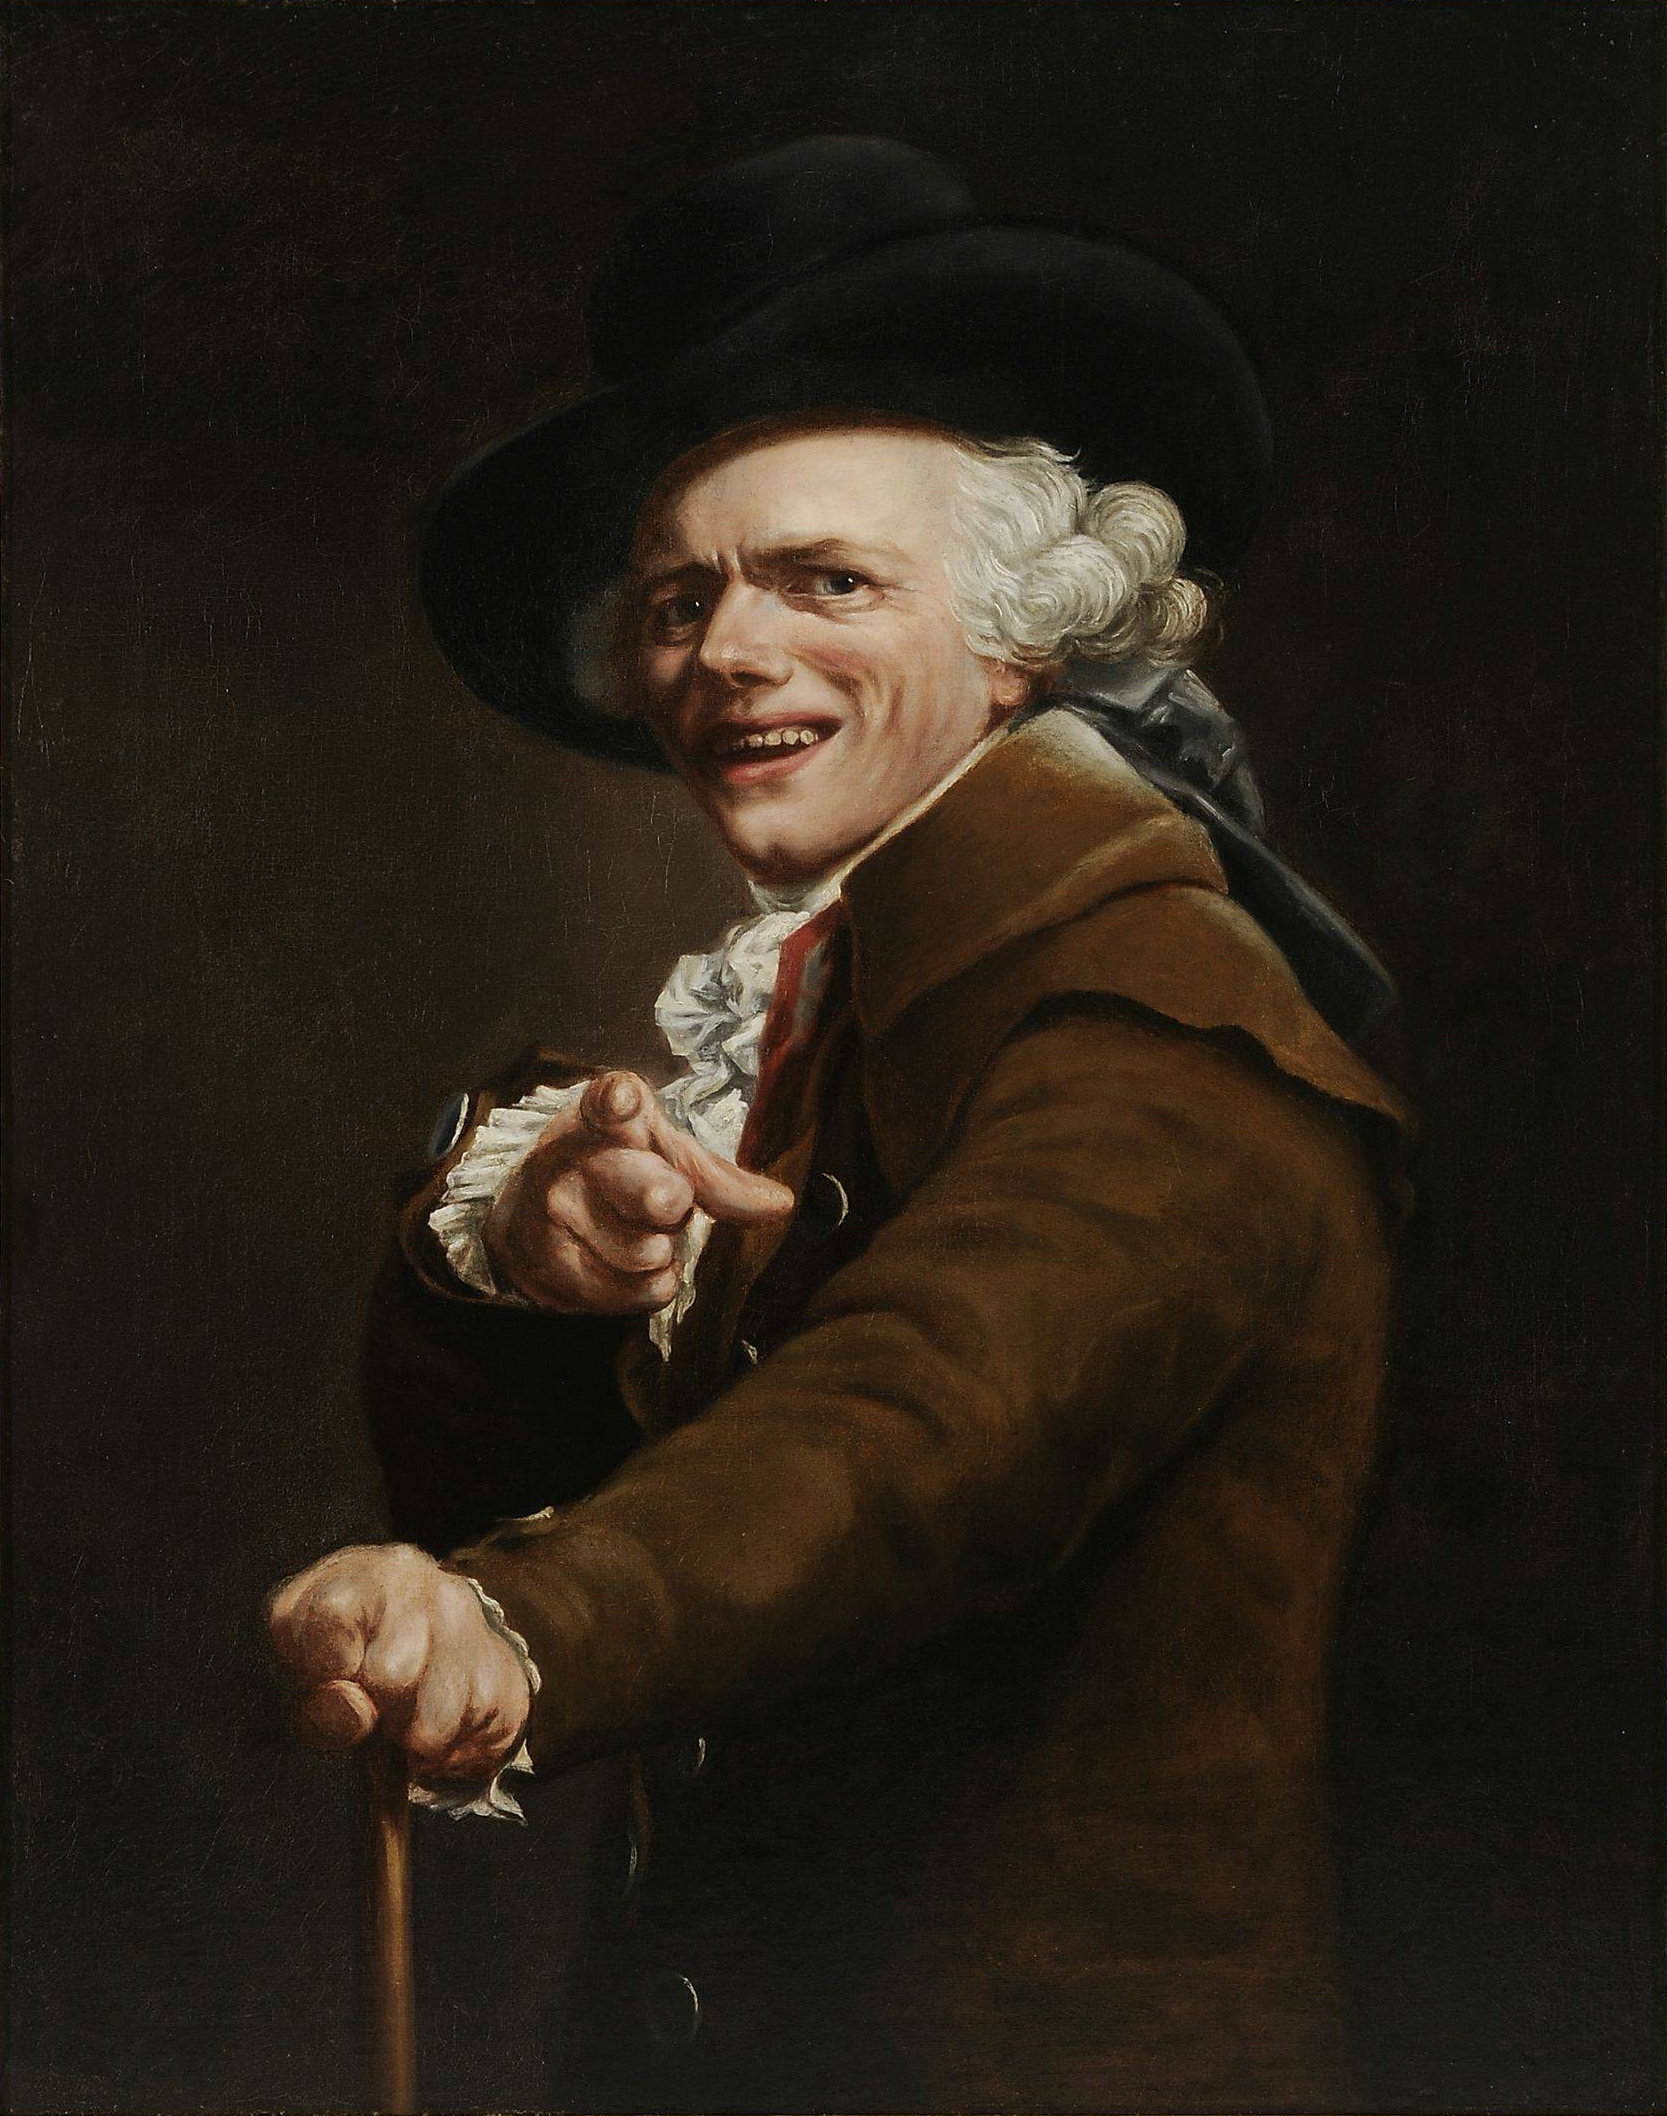 Joseph Ducreux - 26 juni 1735 - 24 juli 1802